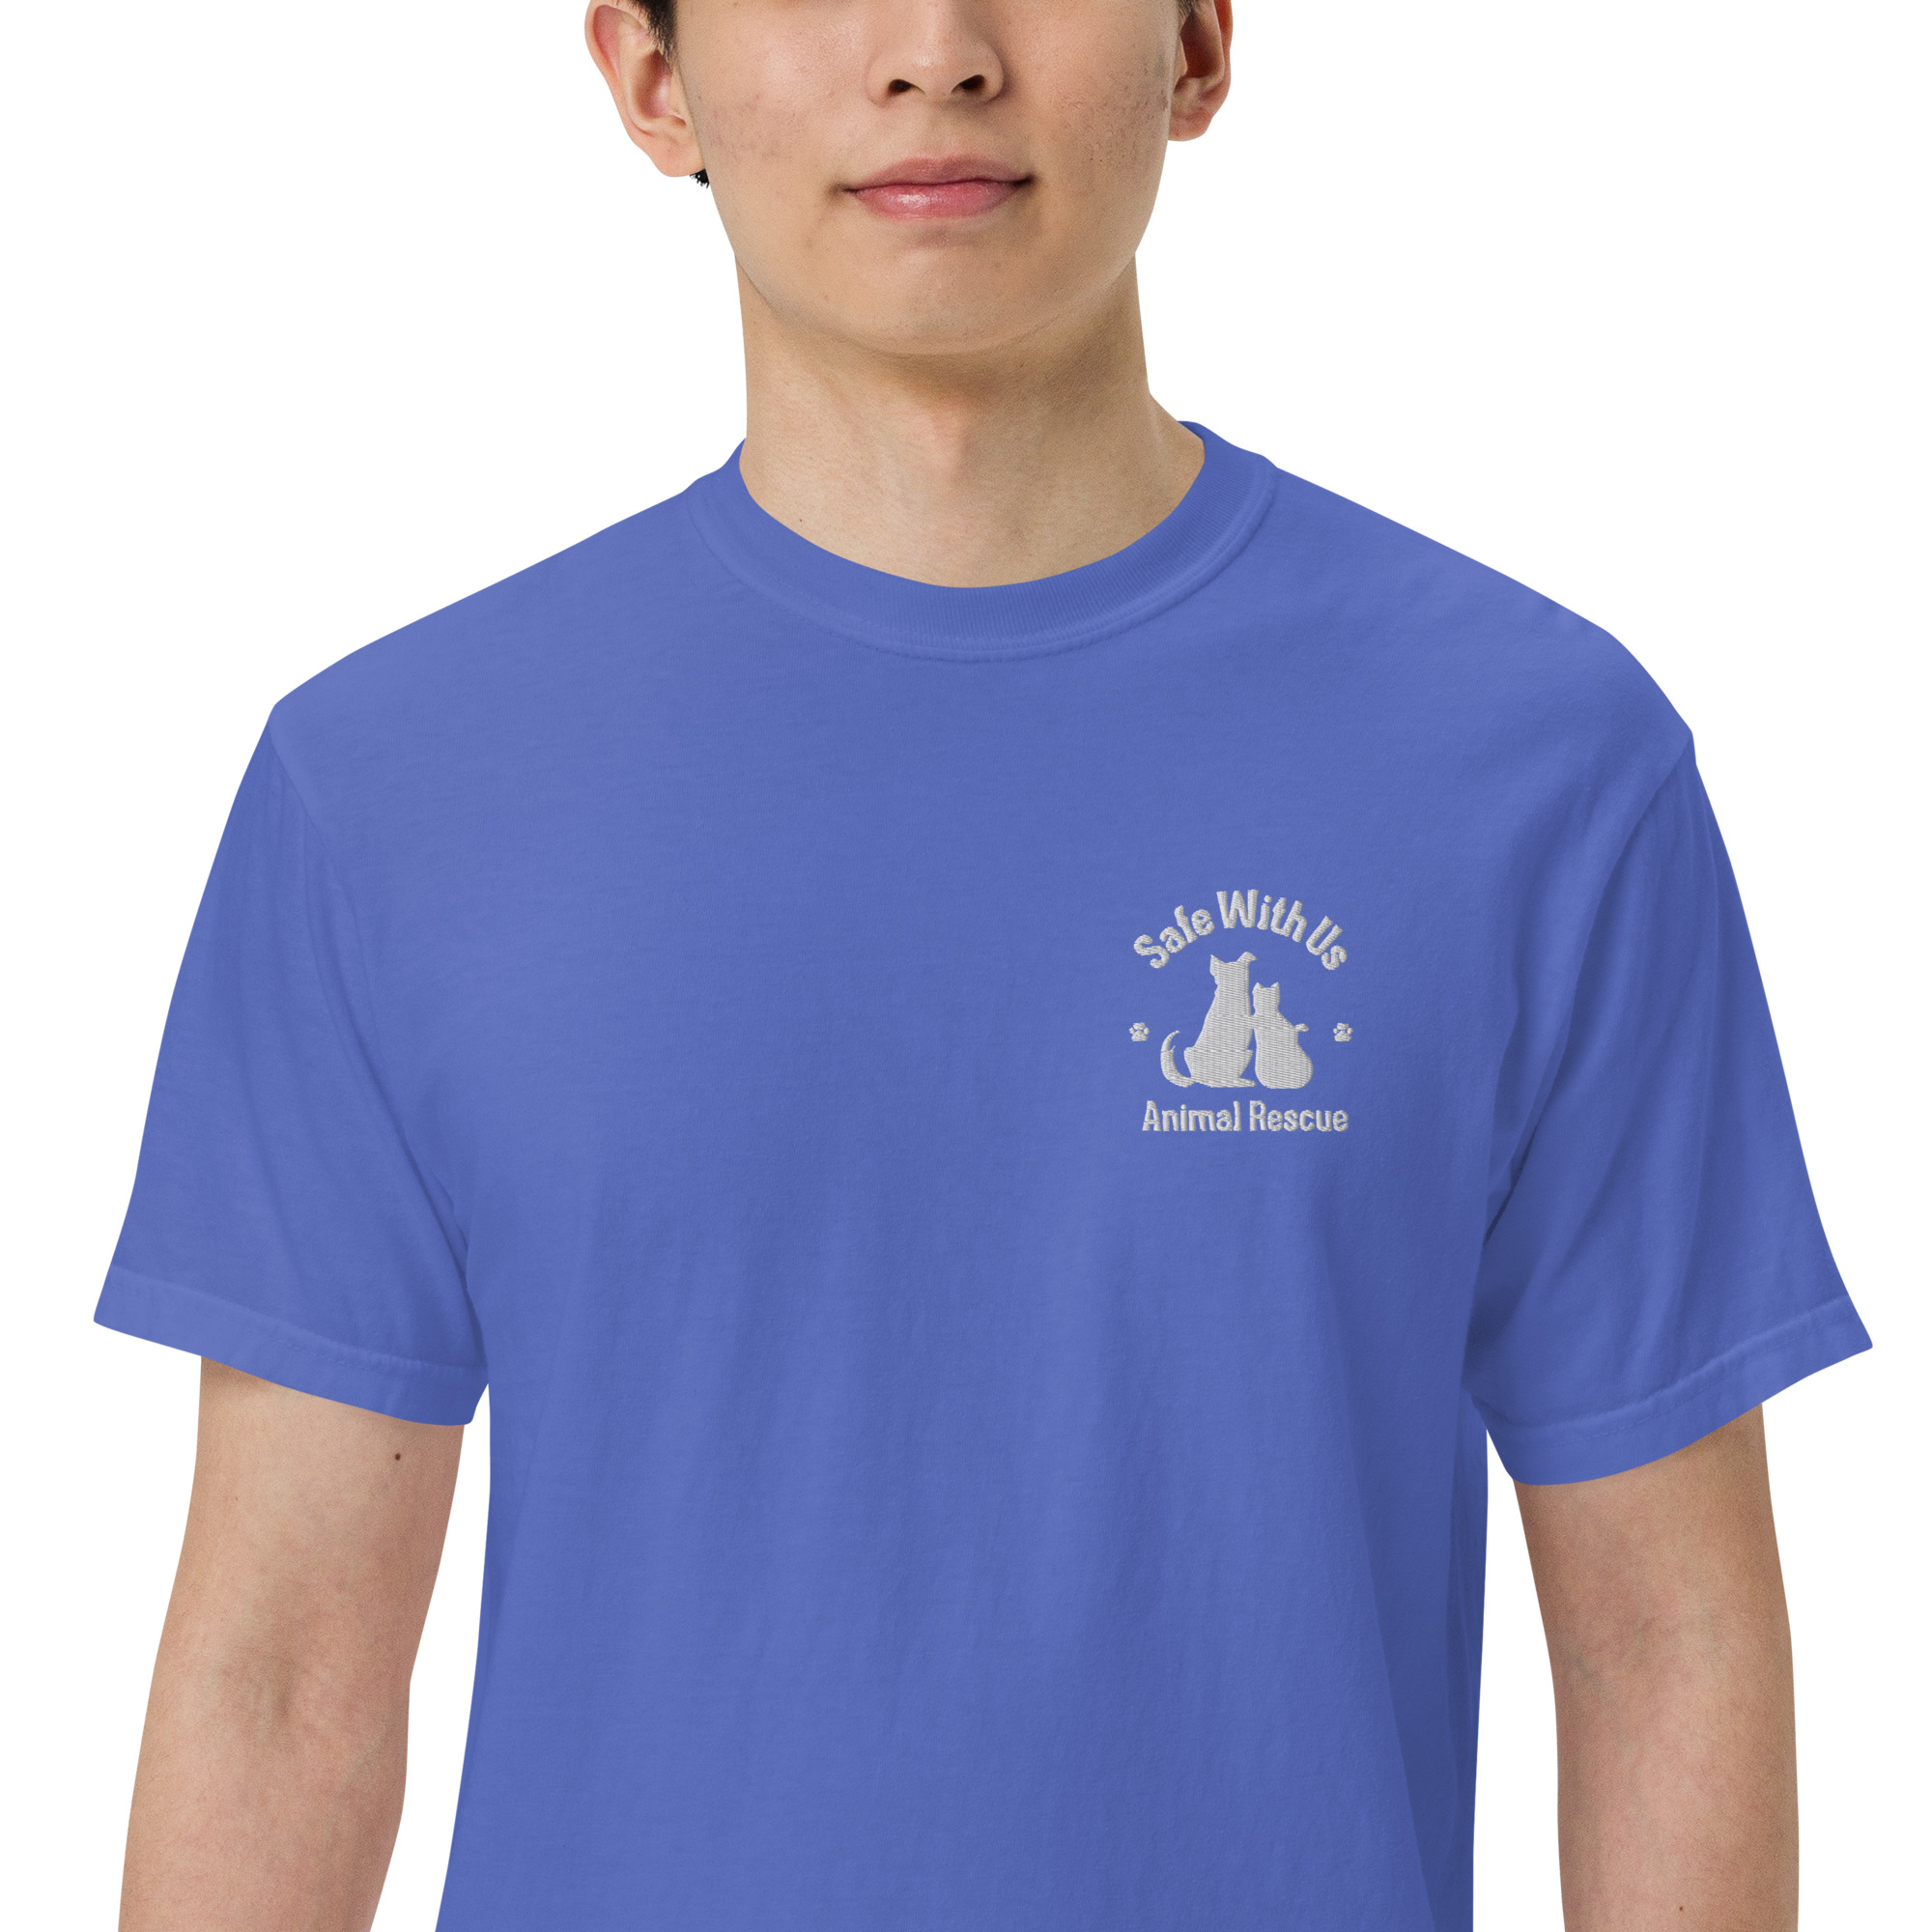 mens-garment-dyed-heavyweight-t-shirt-flo-blue-zoomed-in-6415fedc2809e.jpg